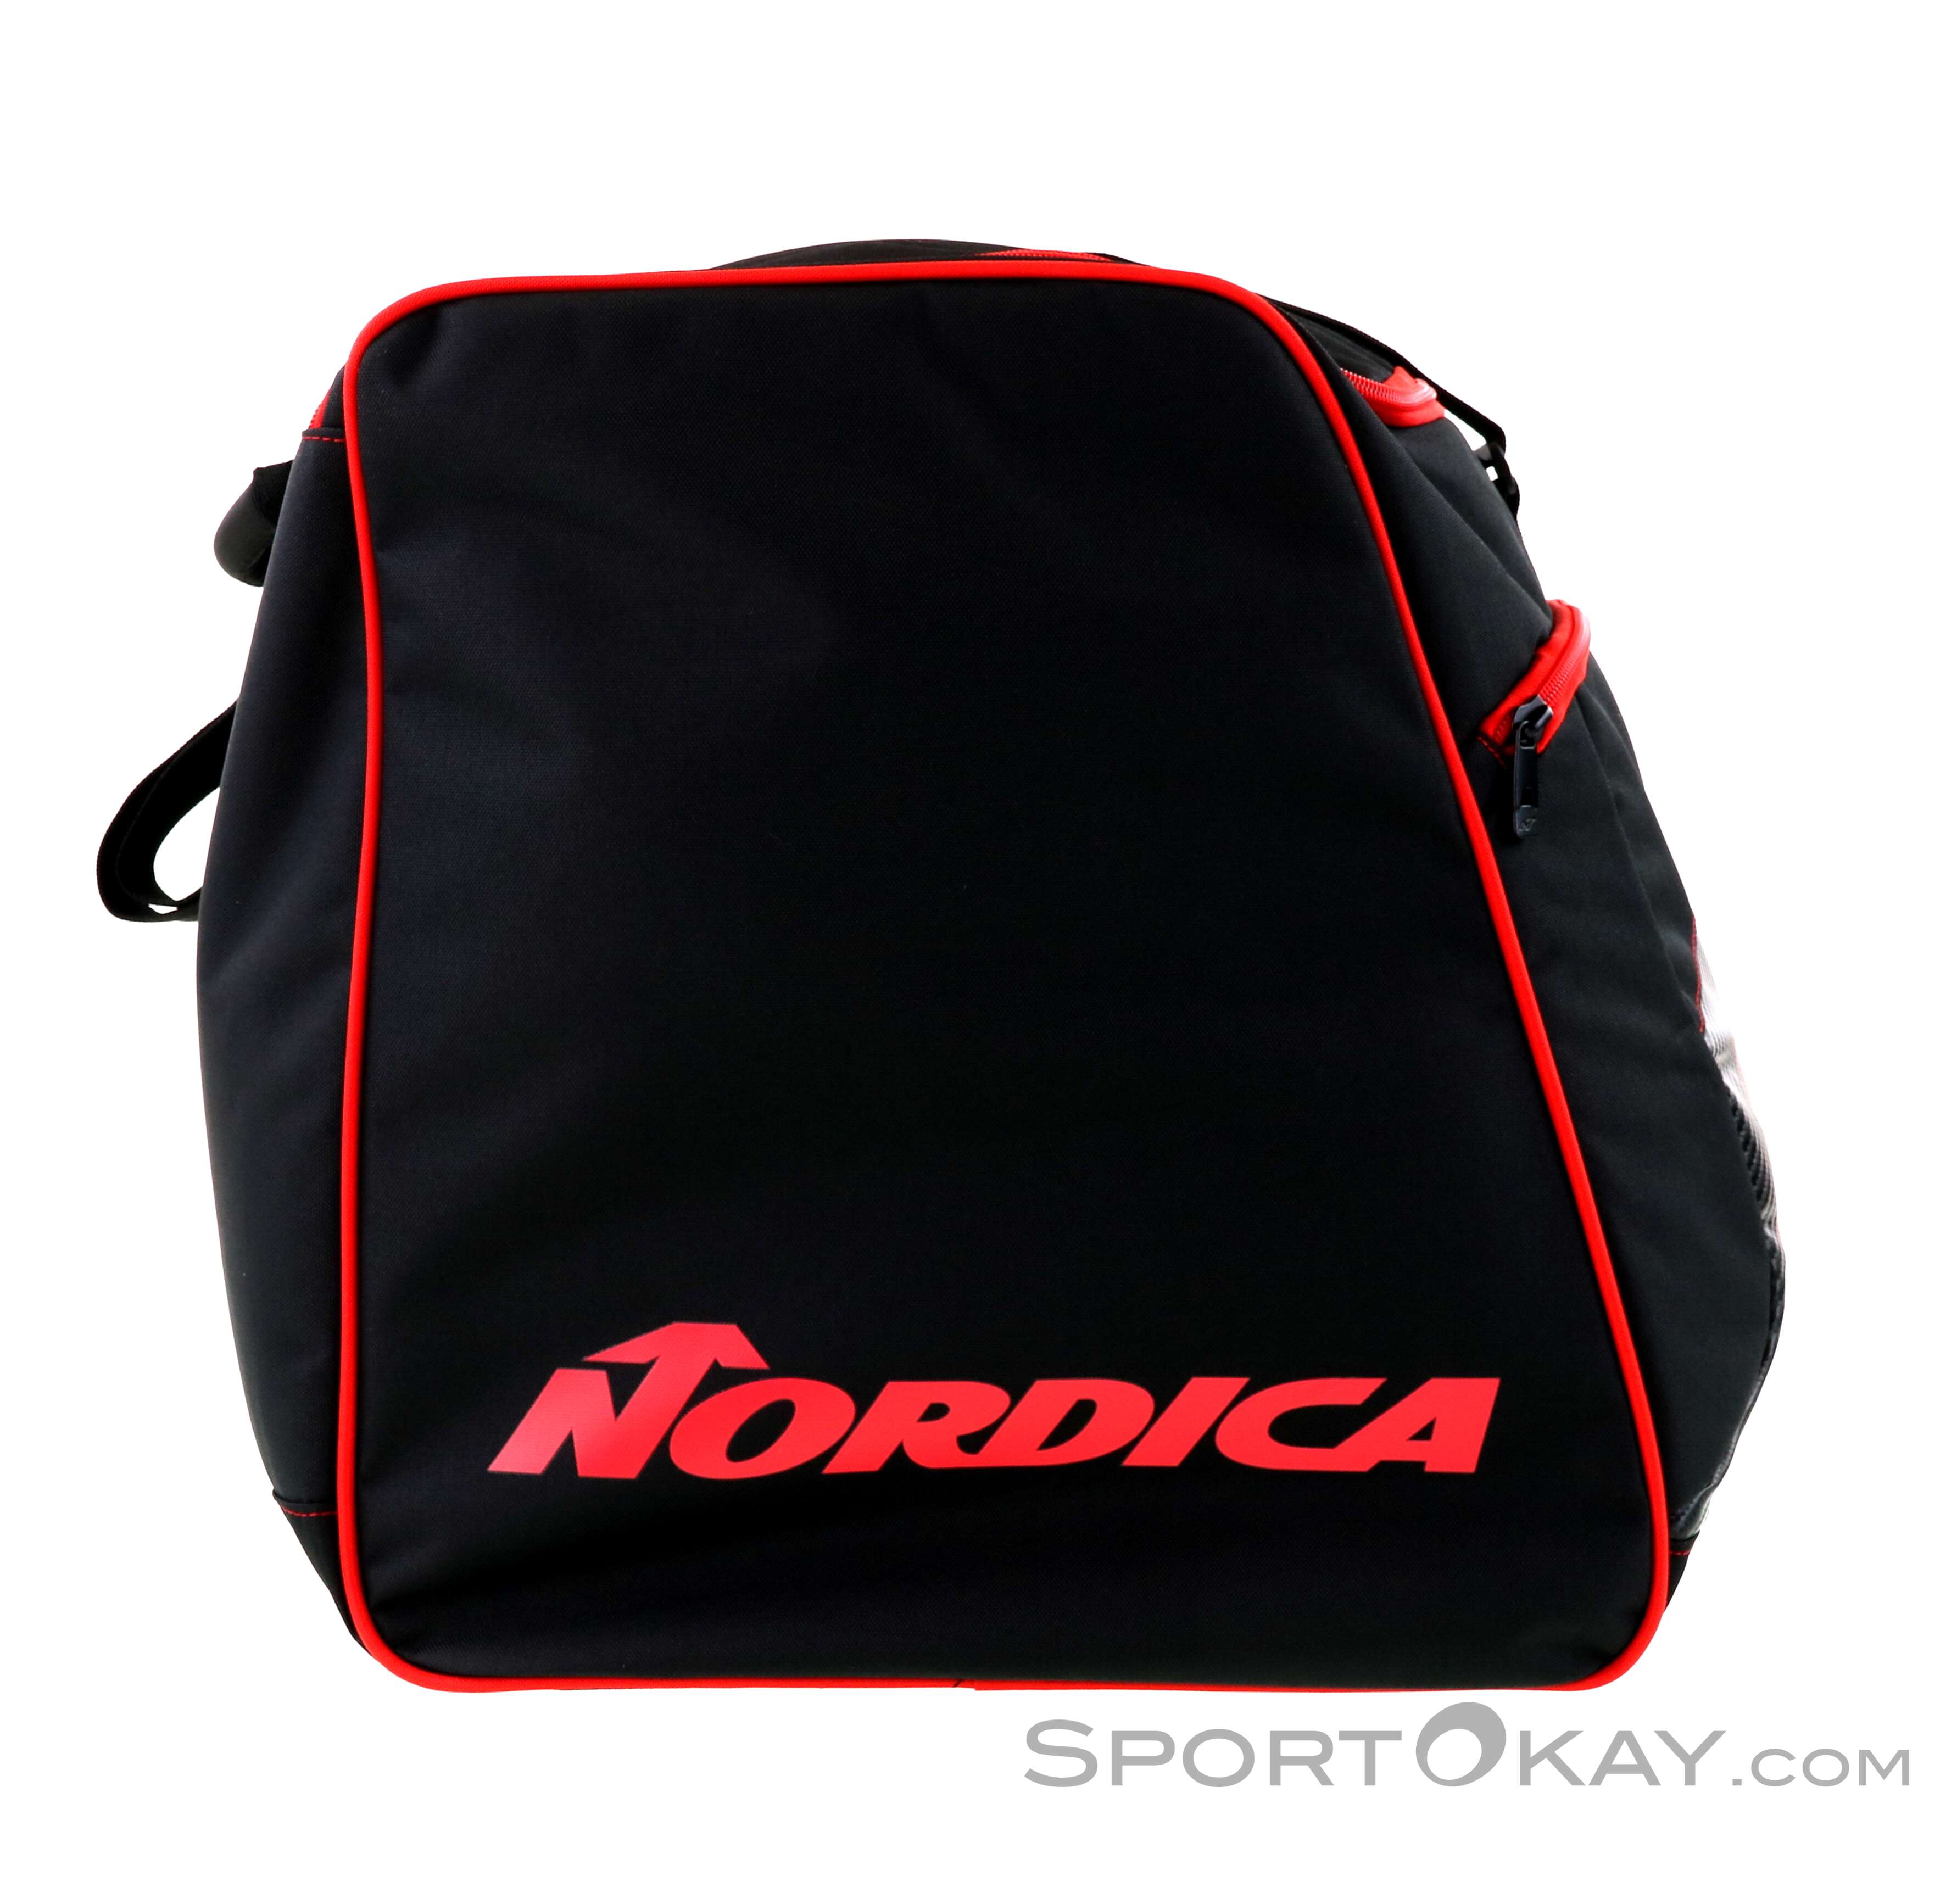 Acquista Nordica Ski Bag Lite Sacca Portasci Black Red online Mancini Store